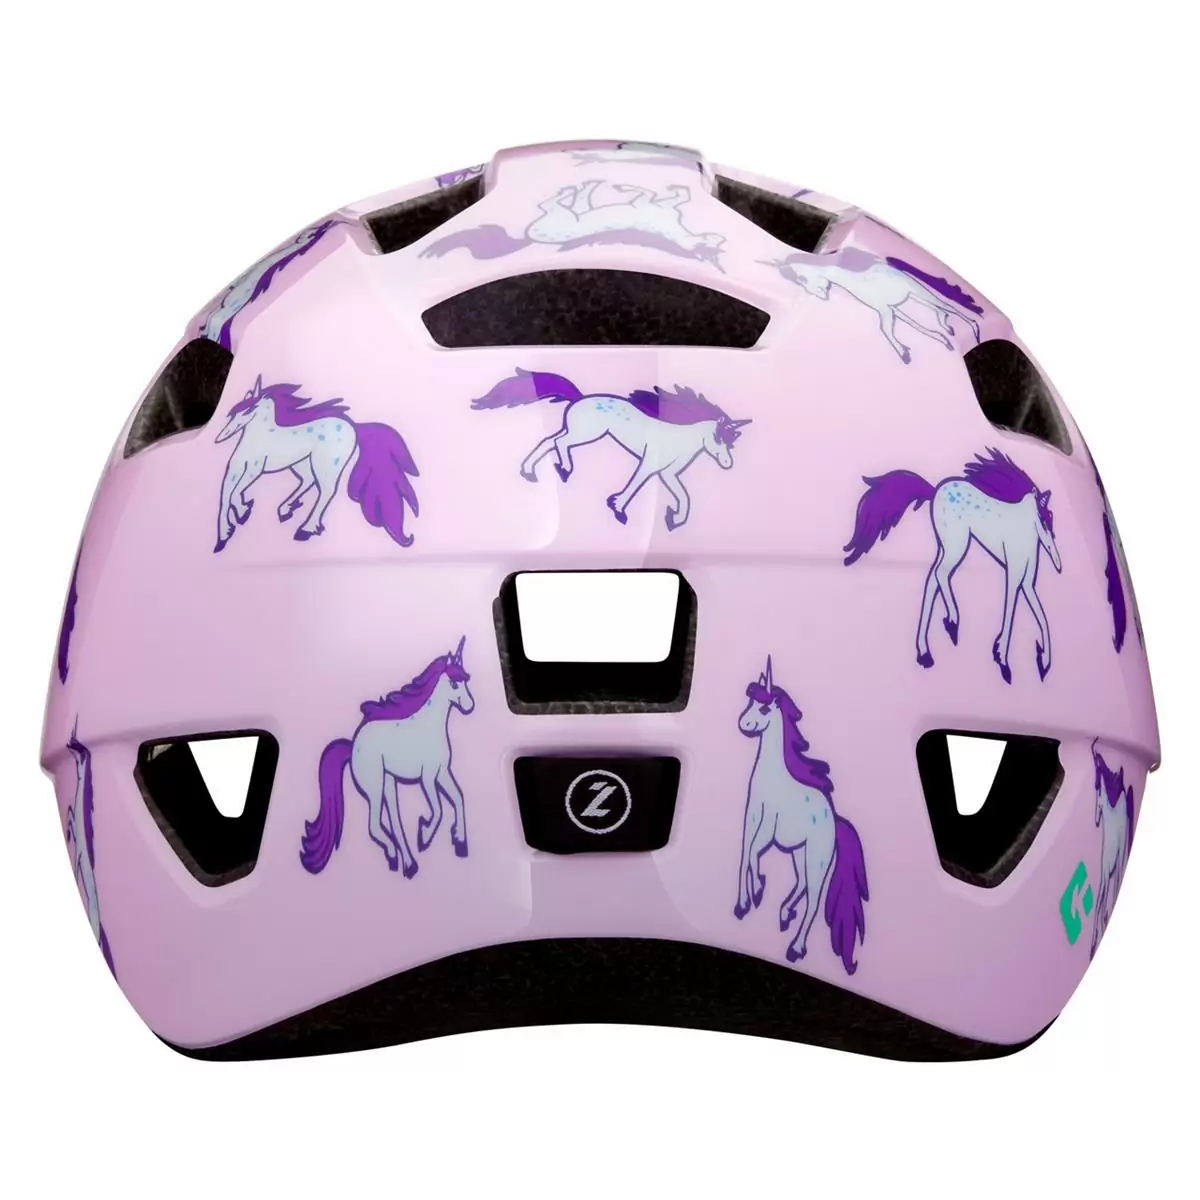 Nutz Kids Helmet KinetiCore CE Unicorn Pink/White One Size (50-56cm) #3